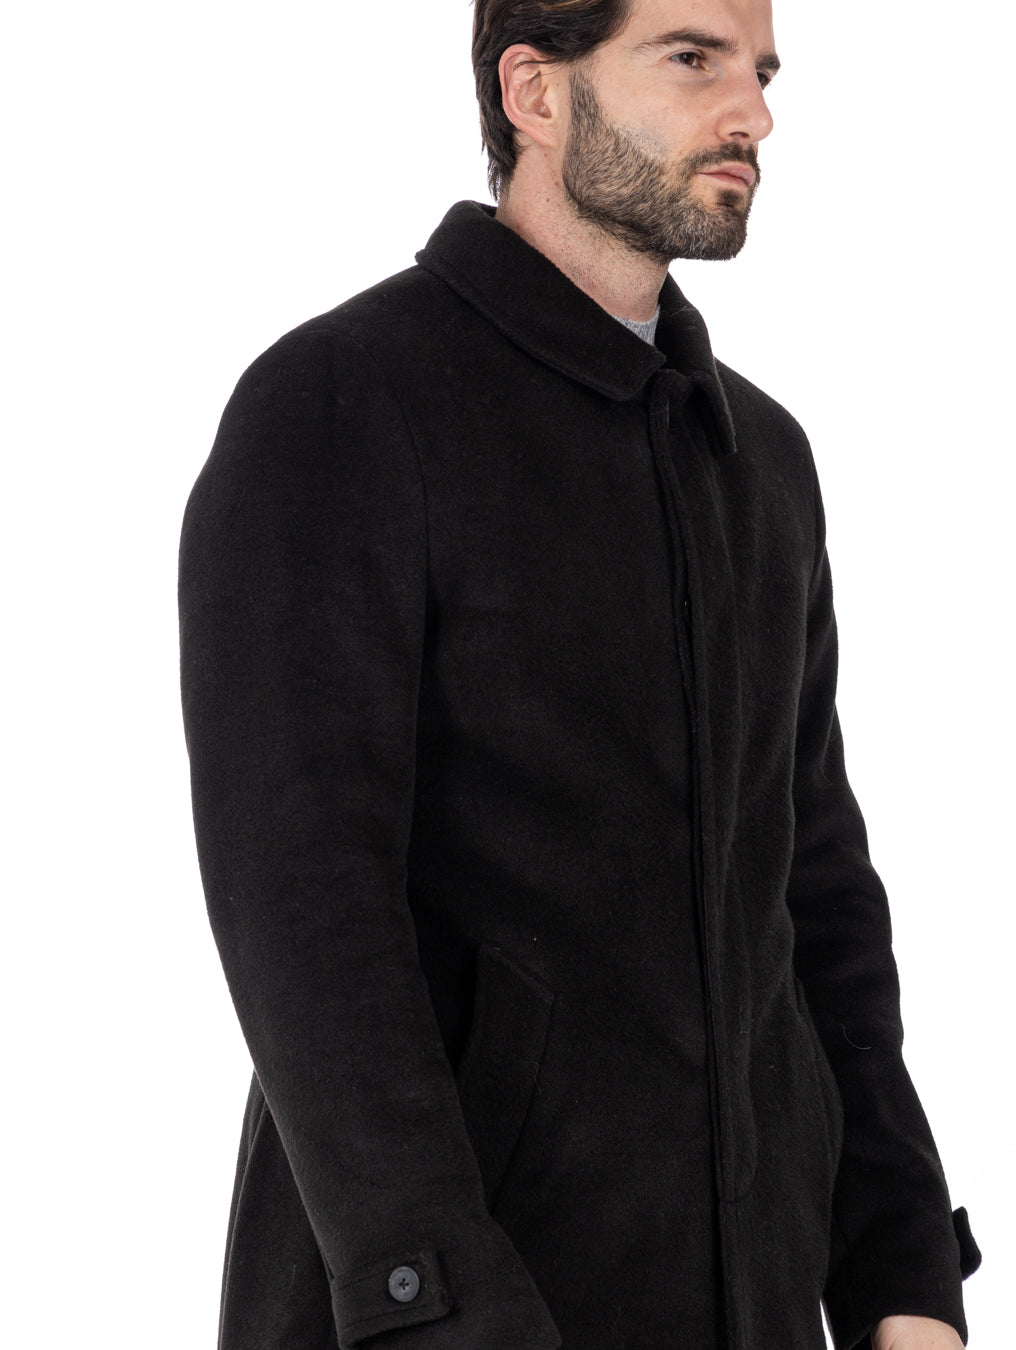 Jean - black single-breasted coat